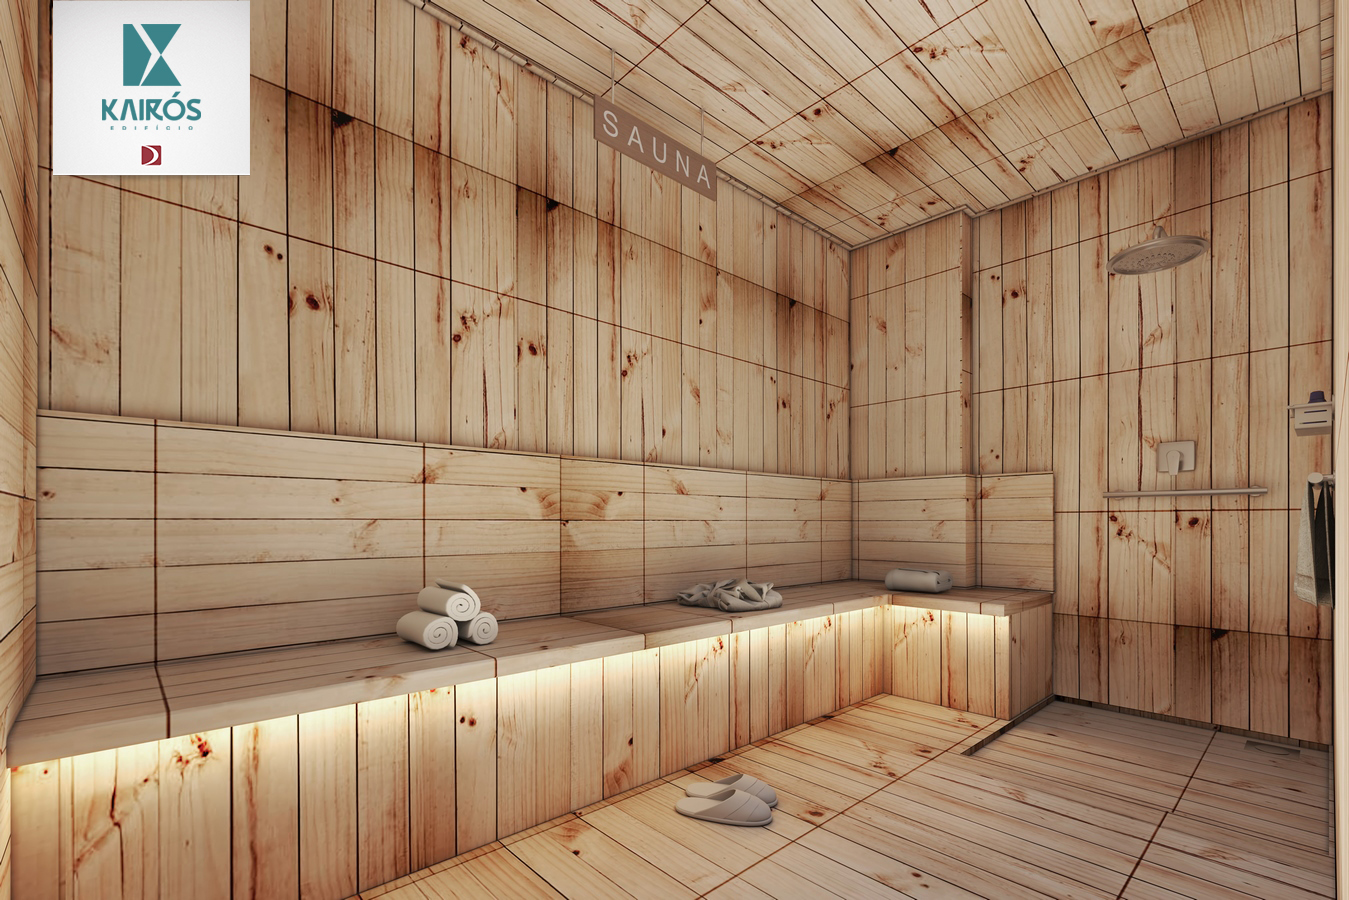 09_kairos sauna (3) (Cópia)